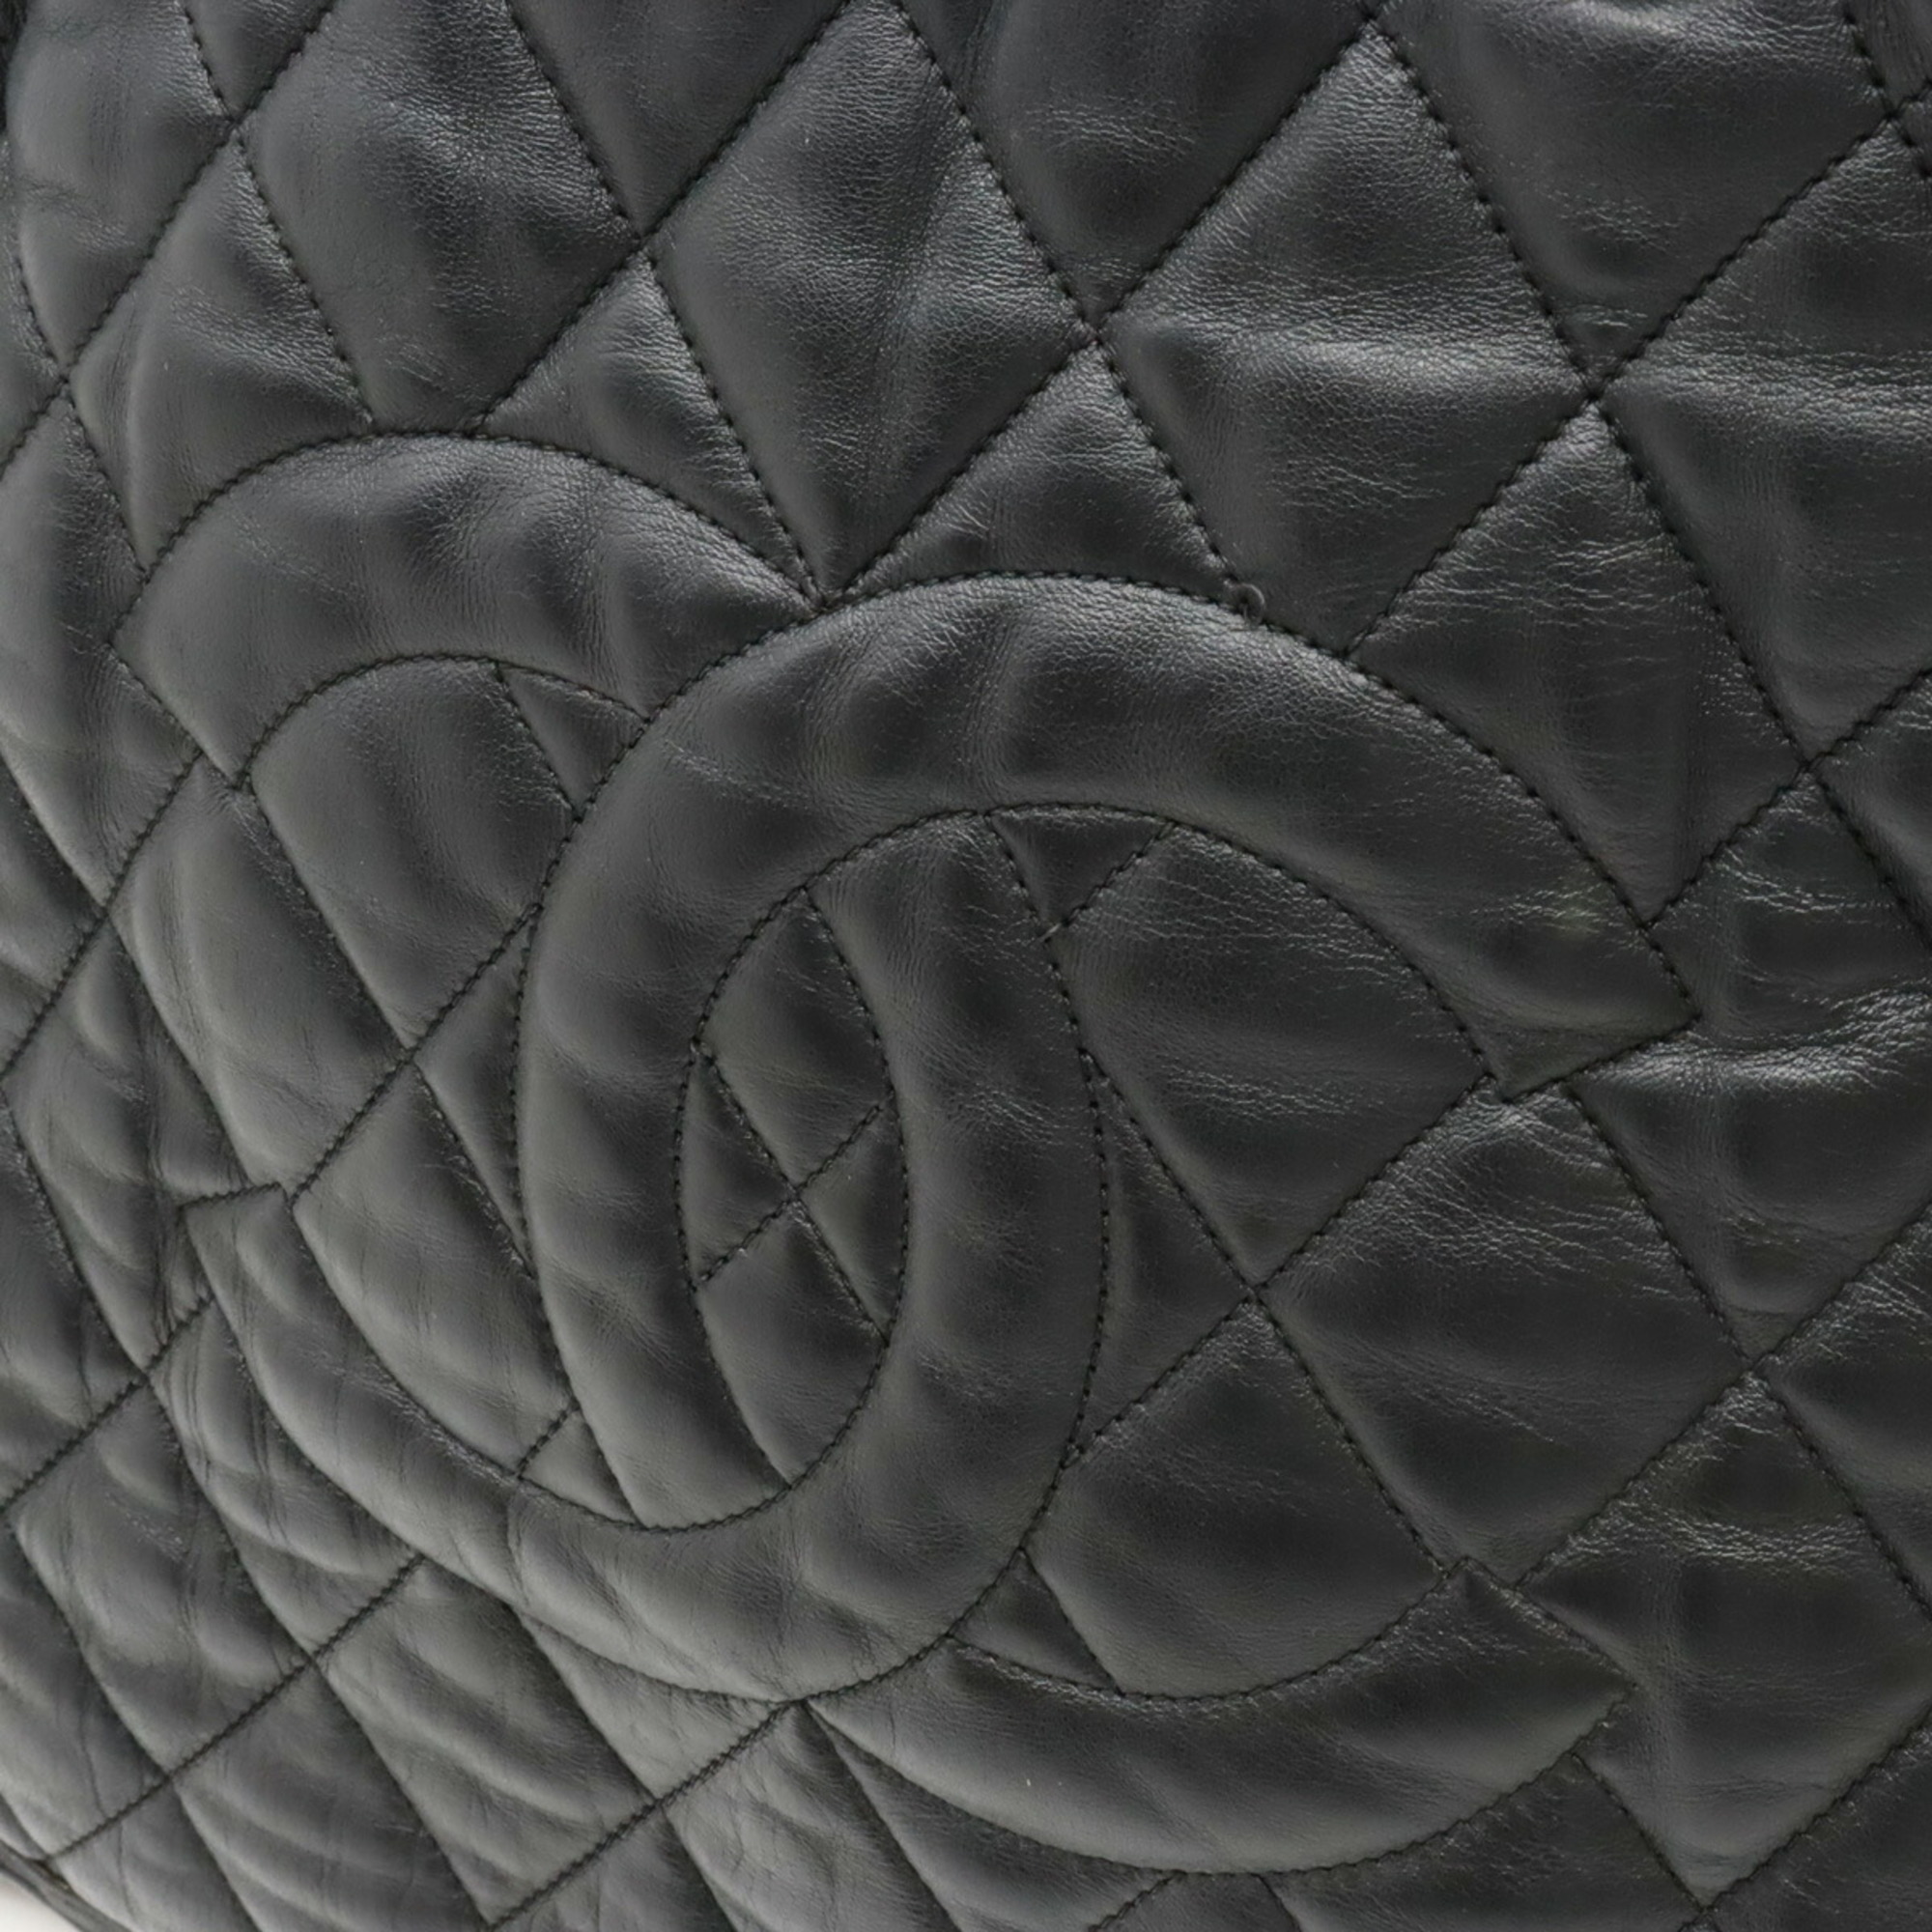 CHANEL Chanel Matelasse Coco Mark Chain Shoulder Tote Bag Nylon Canvas Leather Black